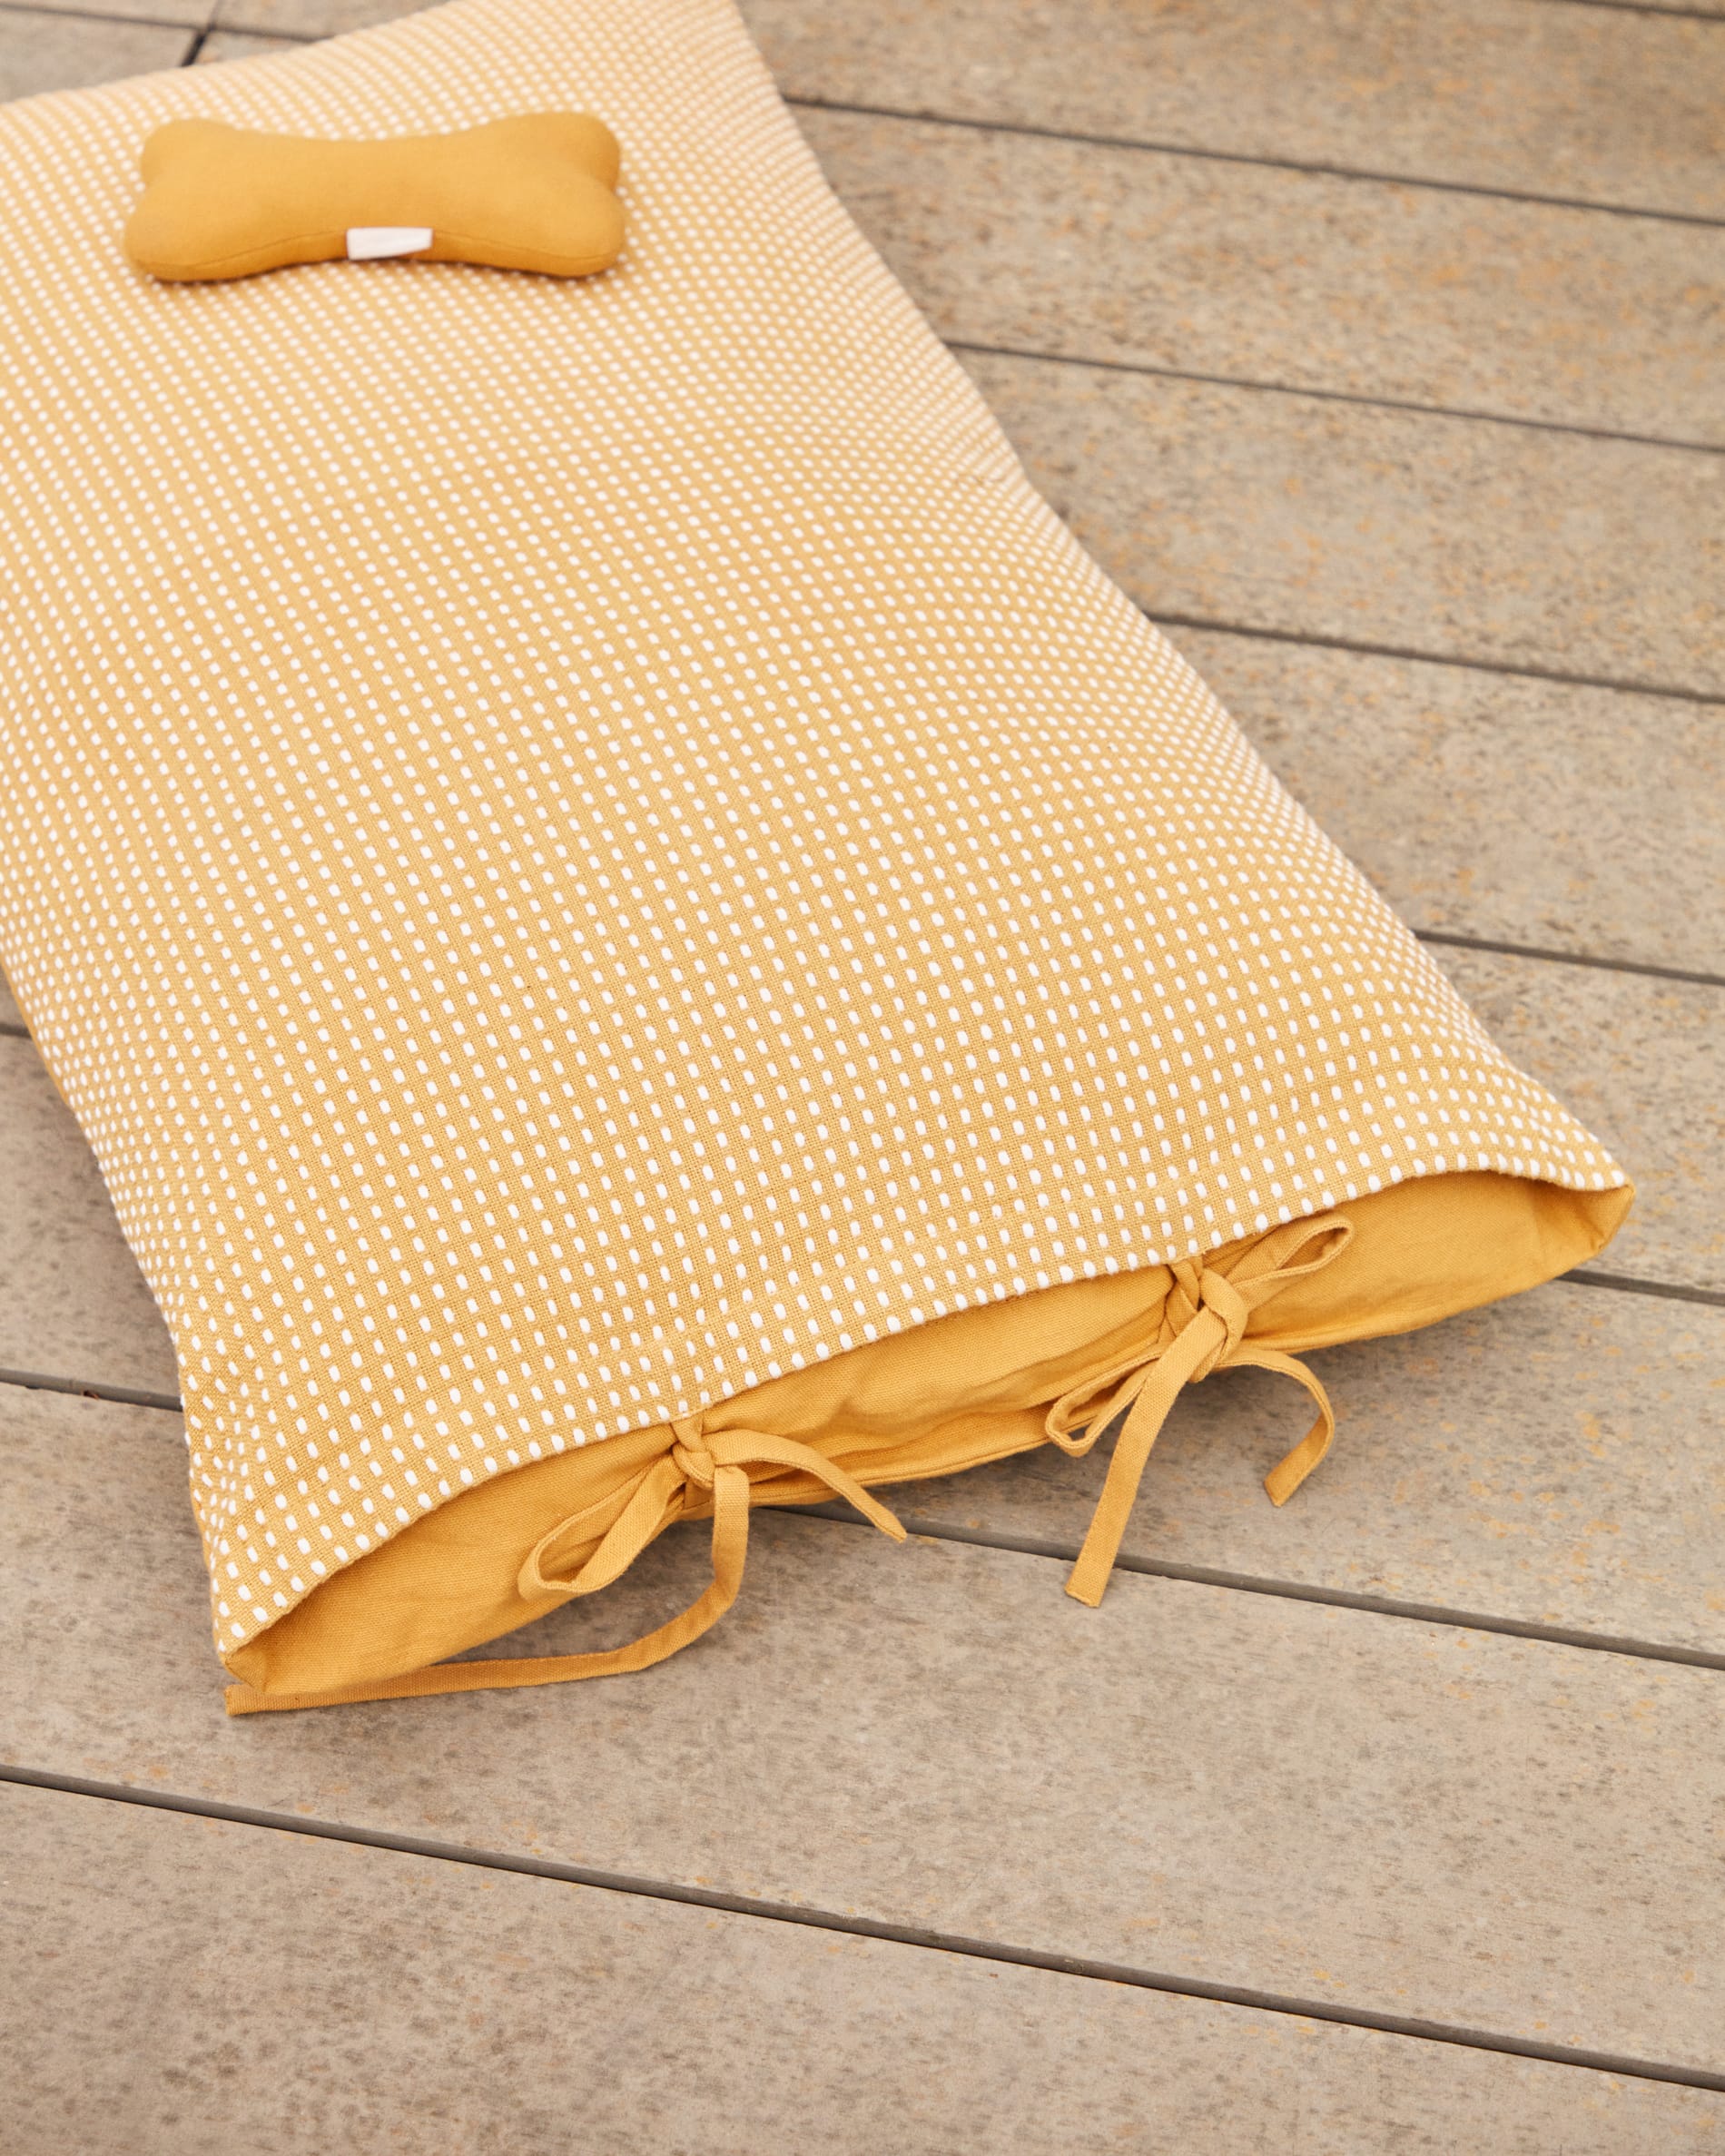 Trufa 100% cotton cushion with mustard and white backstitch, 50 x 80 cm